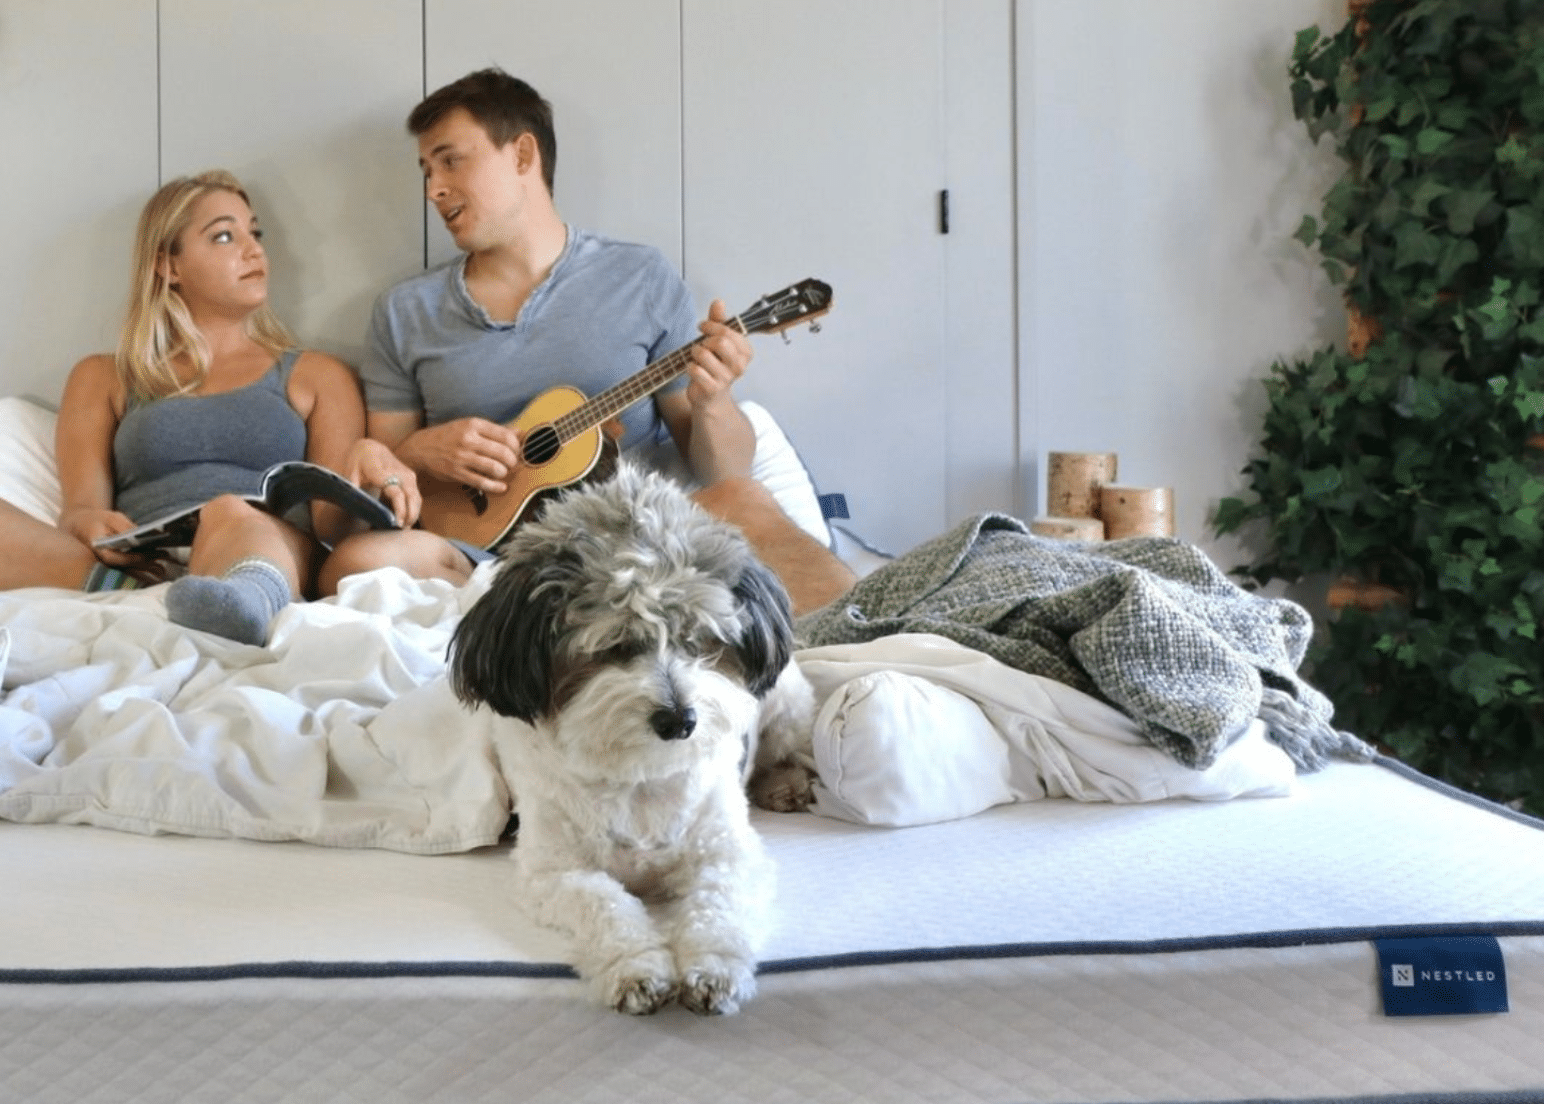  A couple and a dog on an organic latex mattress
